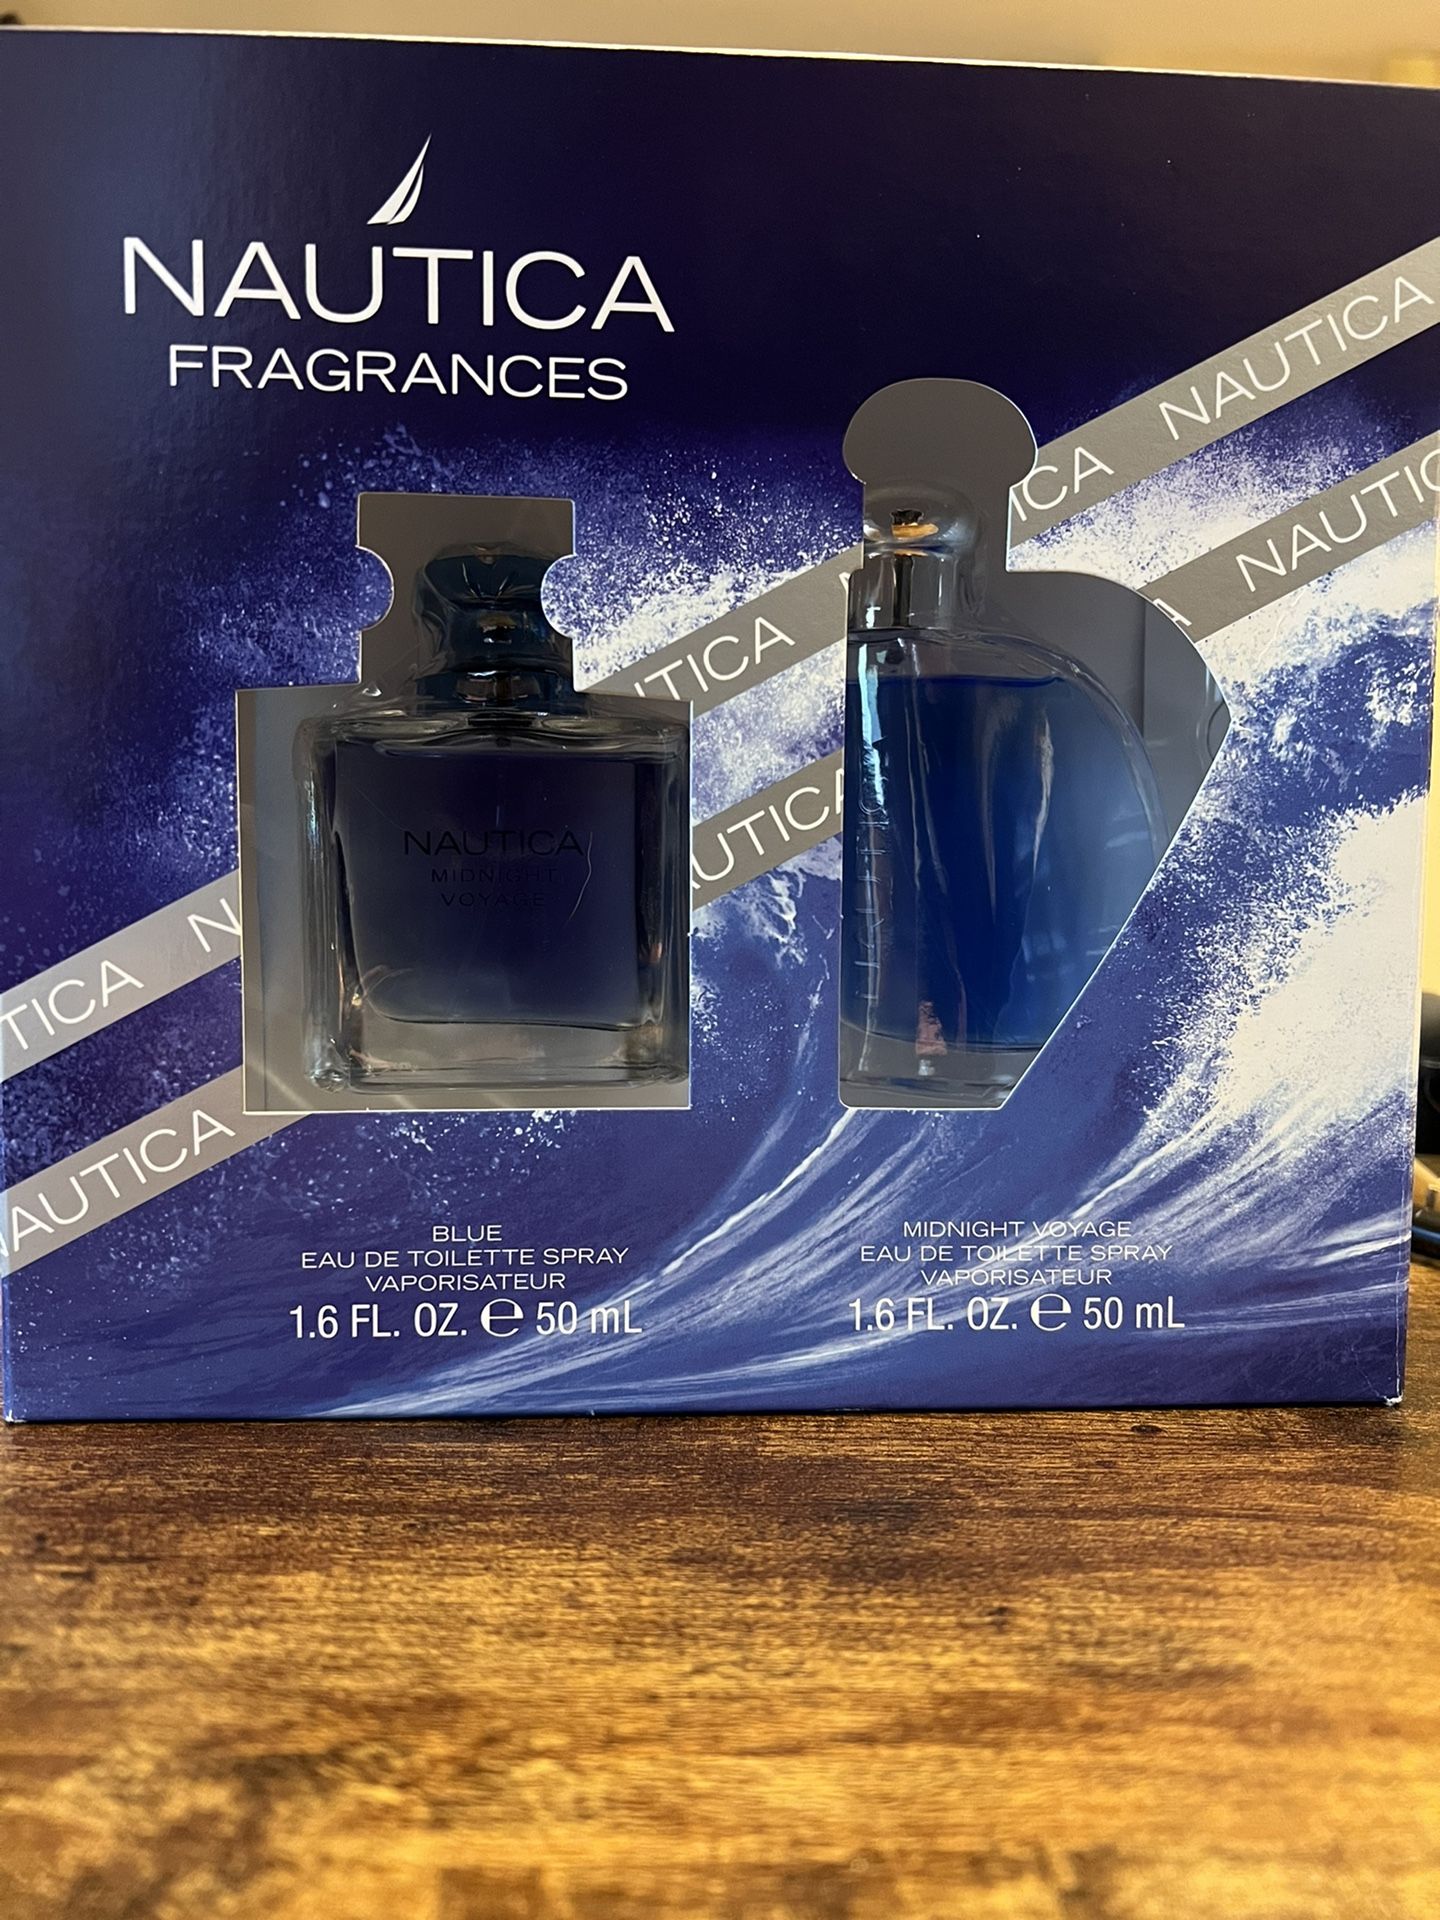 Nautical Fragrances